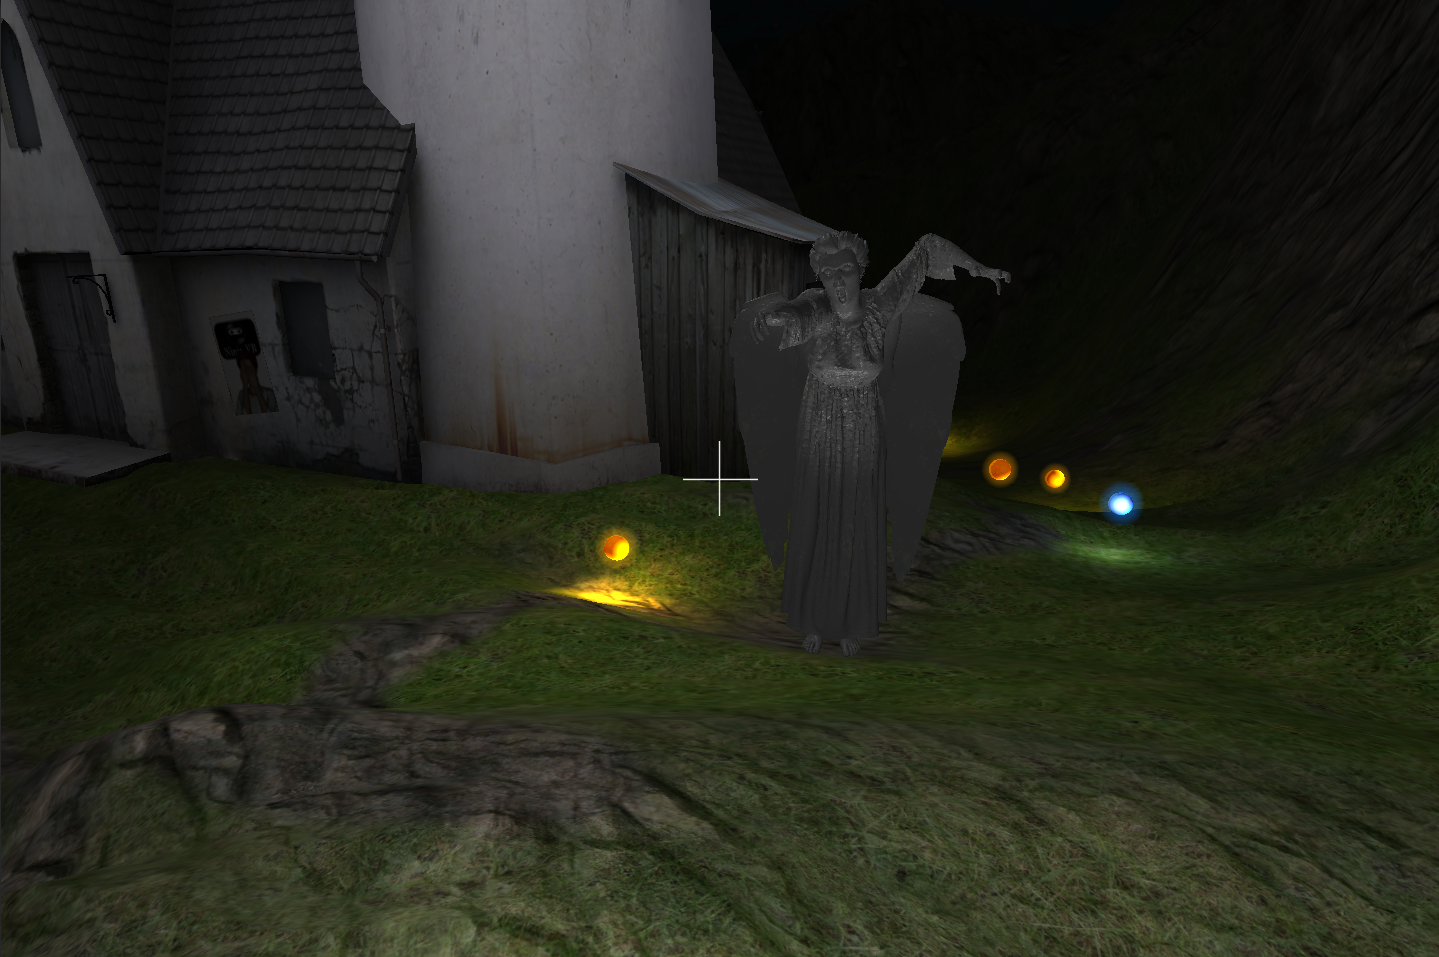 screenshot 3 Weeping Angels VR content image